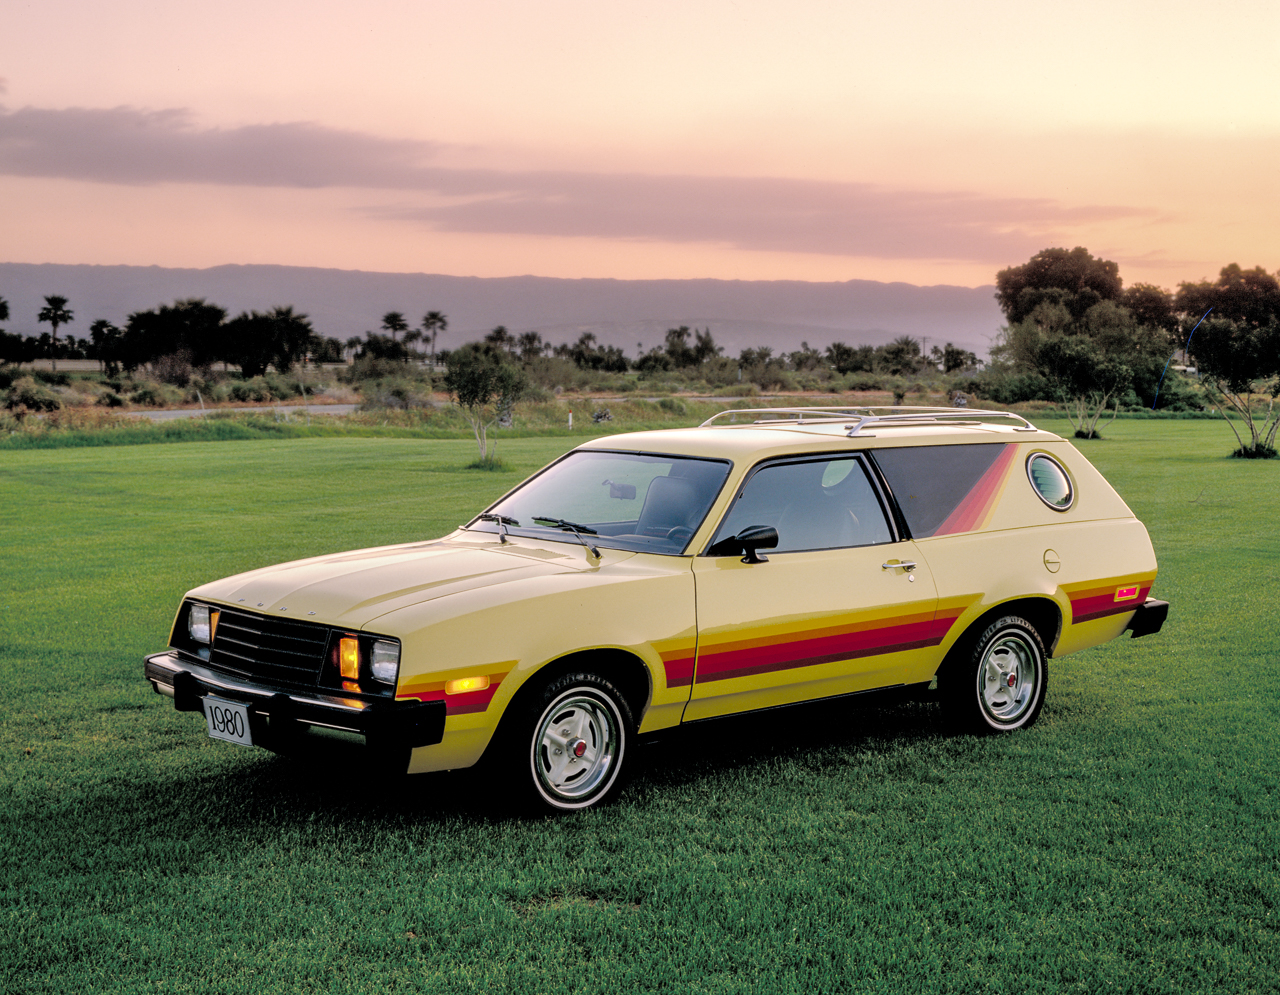 1980 Ford Pinto station wagon